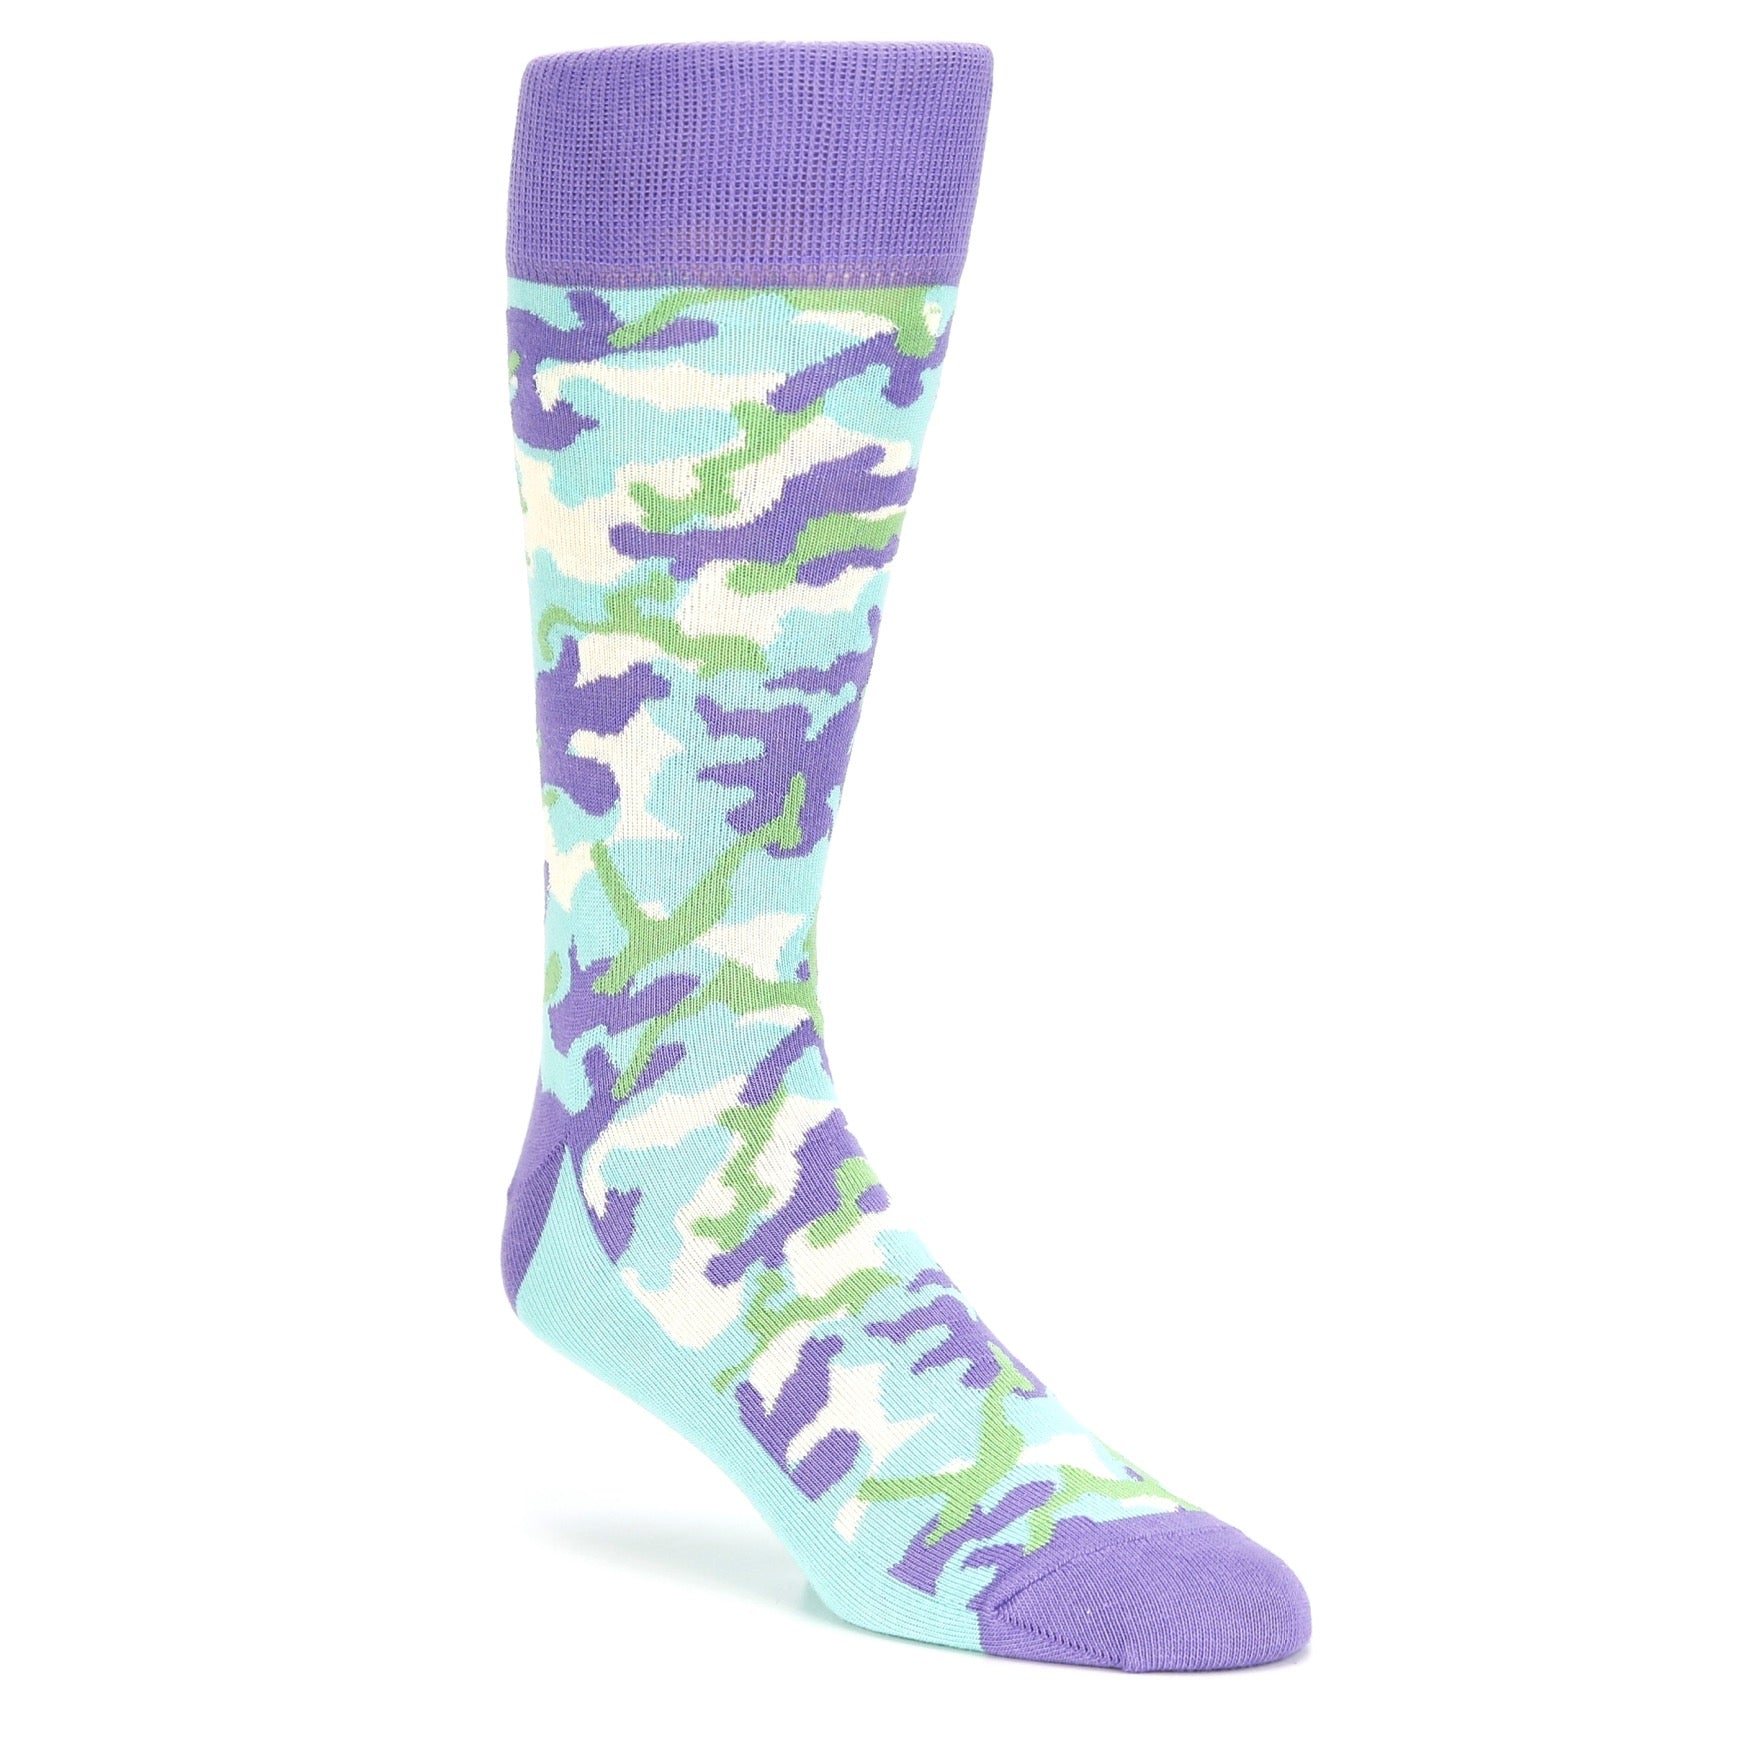 Teal Purple Camo Socks - Men's Dress Socks